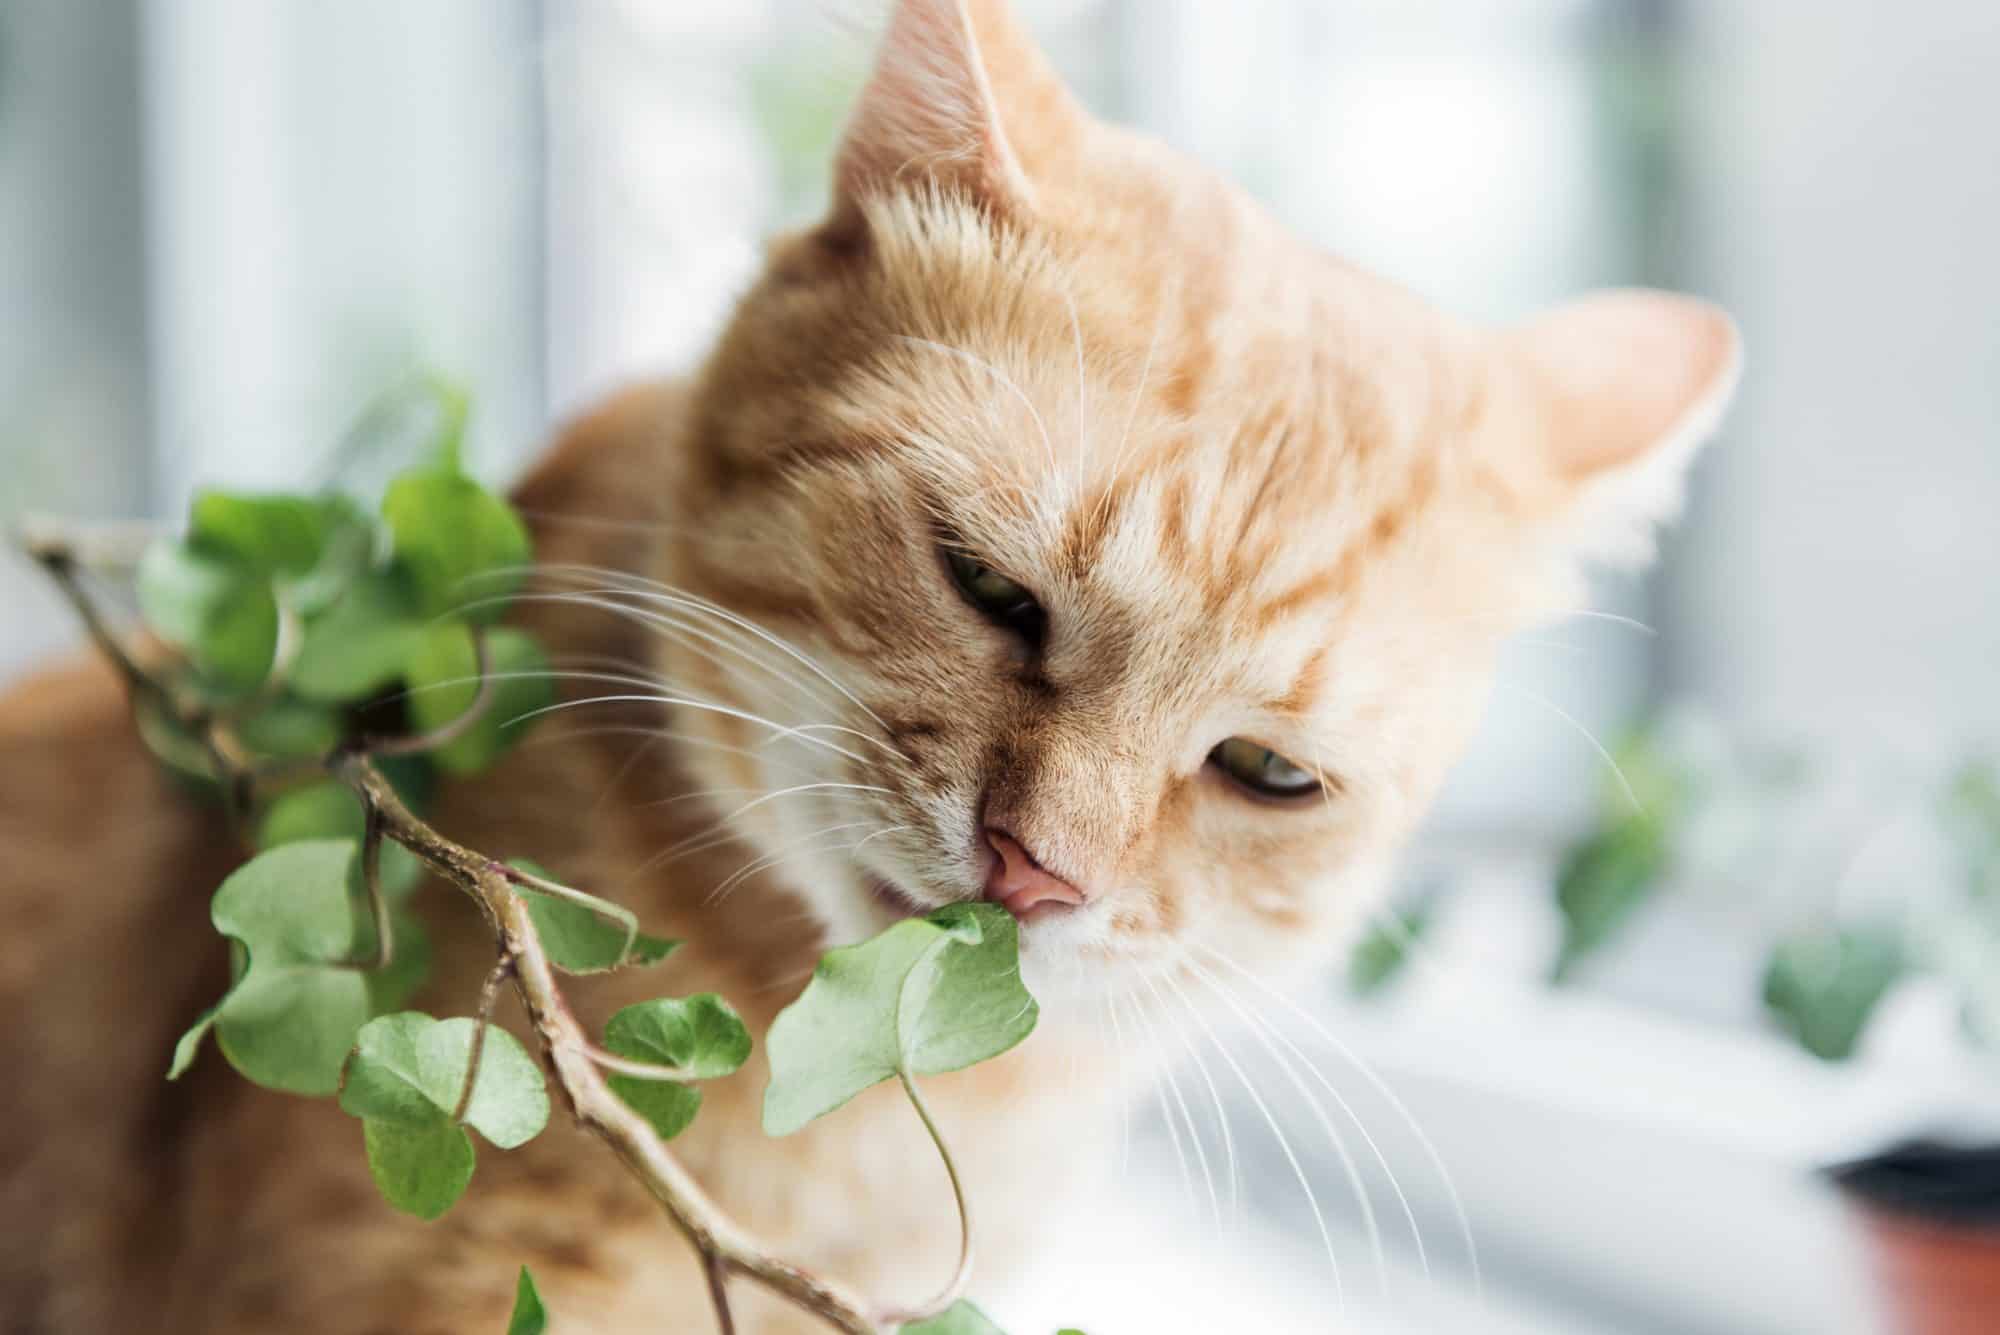 Cat investigating houseplant.